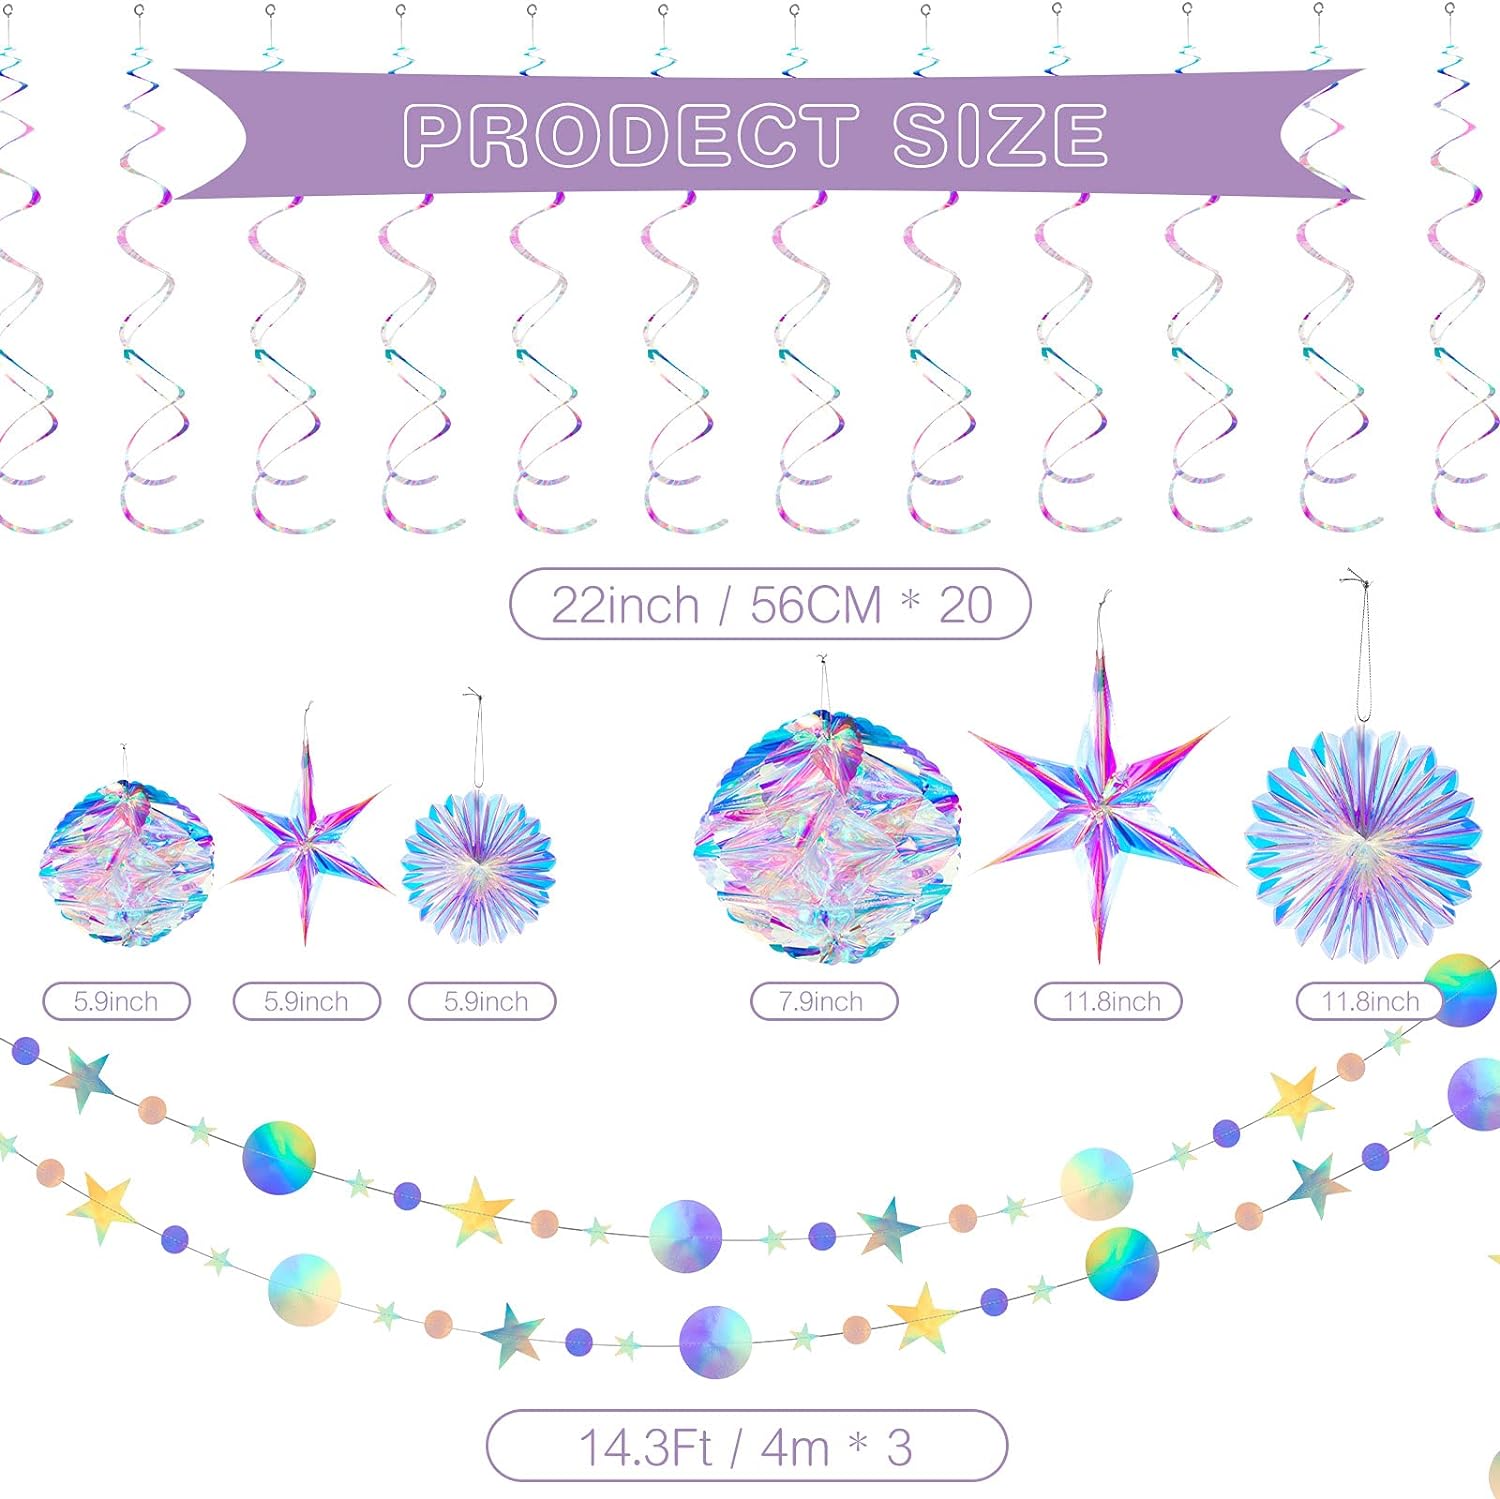 Bulk Rainbow Party Decor Set Hanging Balls Paper Fans Snowflake Garlands White Star Swirls Ideal for Birthdays Weddings Wholesale